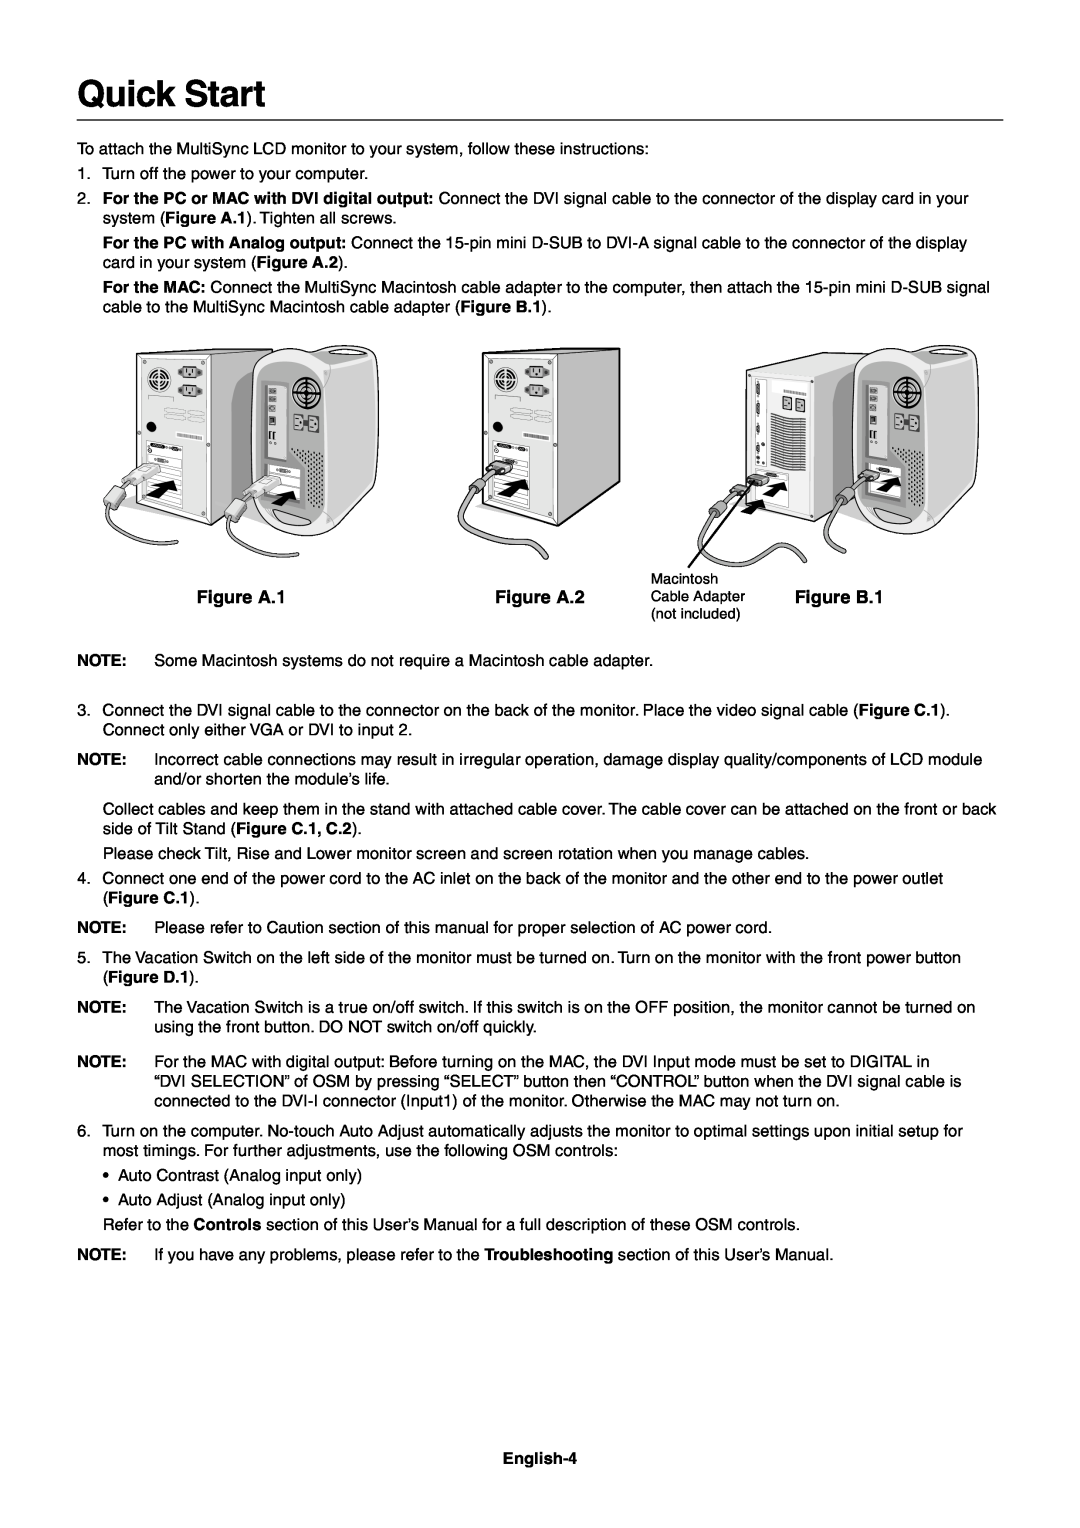 NEC LCD1980SX user manual Quick Start, Figure A.1, Figure A.2, English-4 